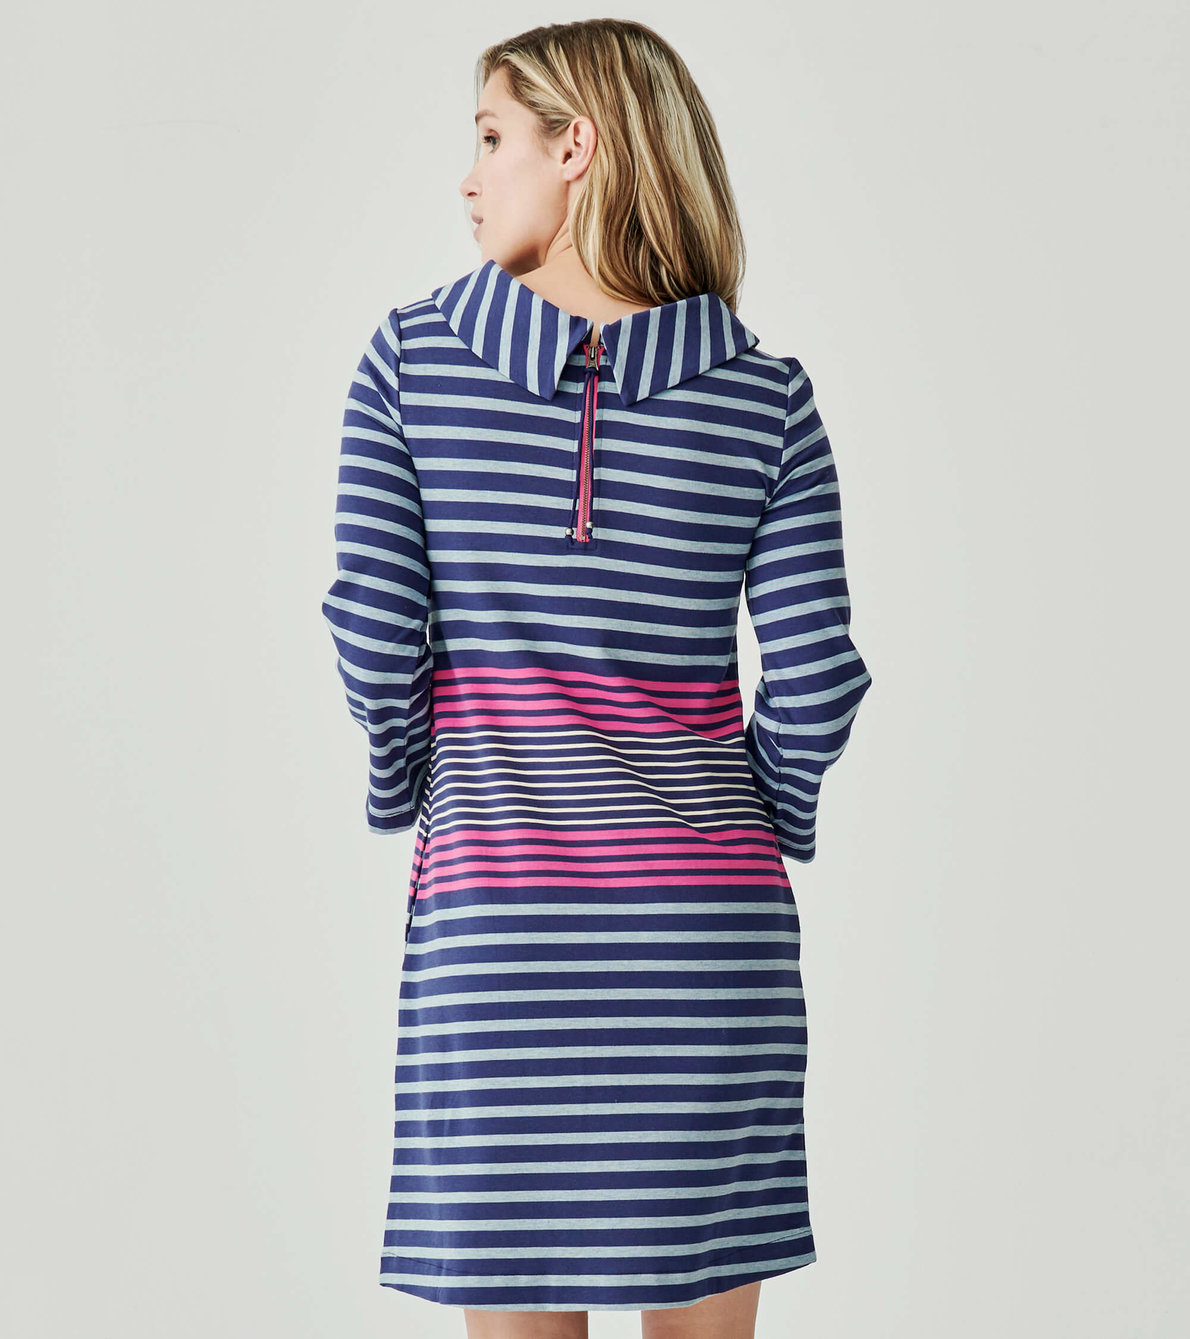 View larger image of Katherine Dress - Fedora Stripes